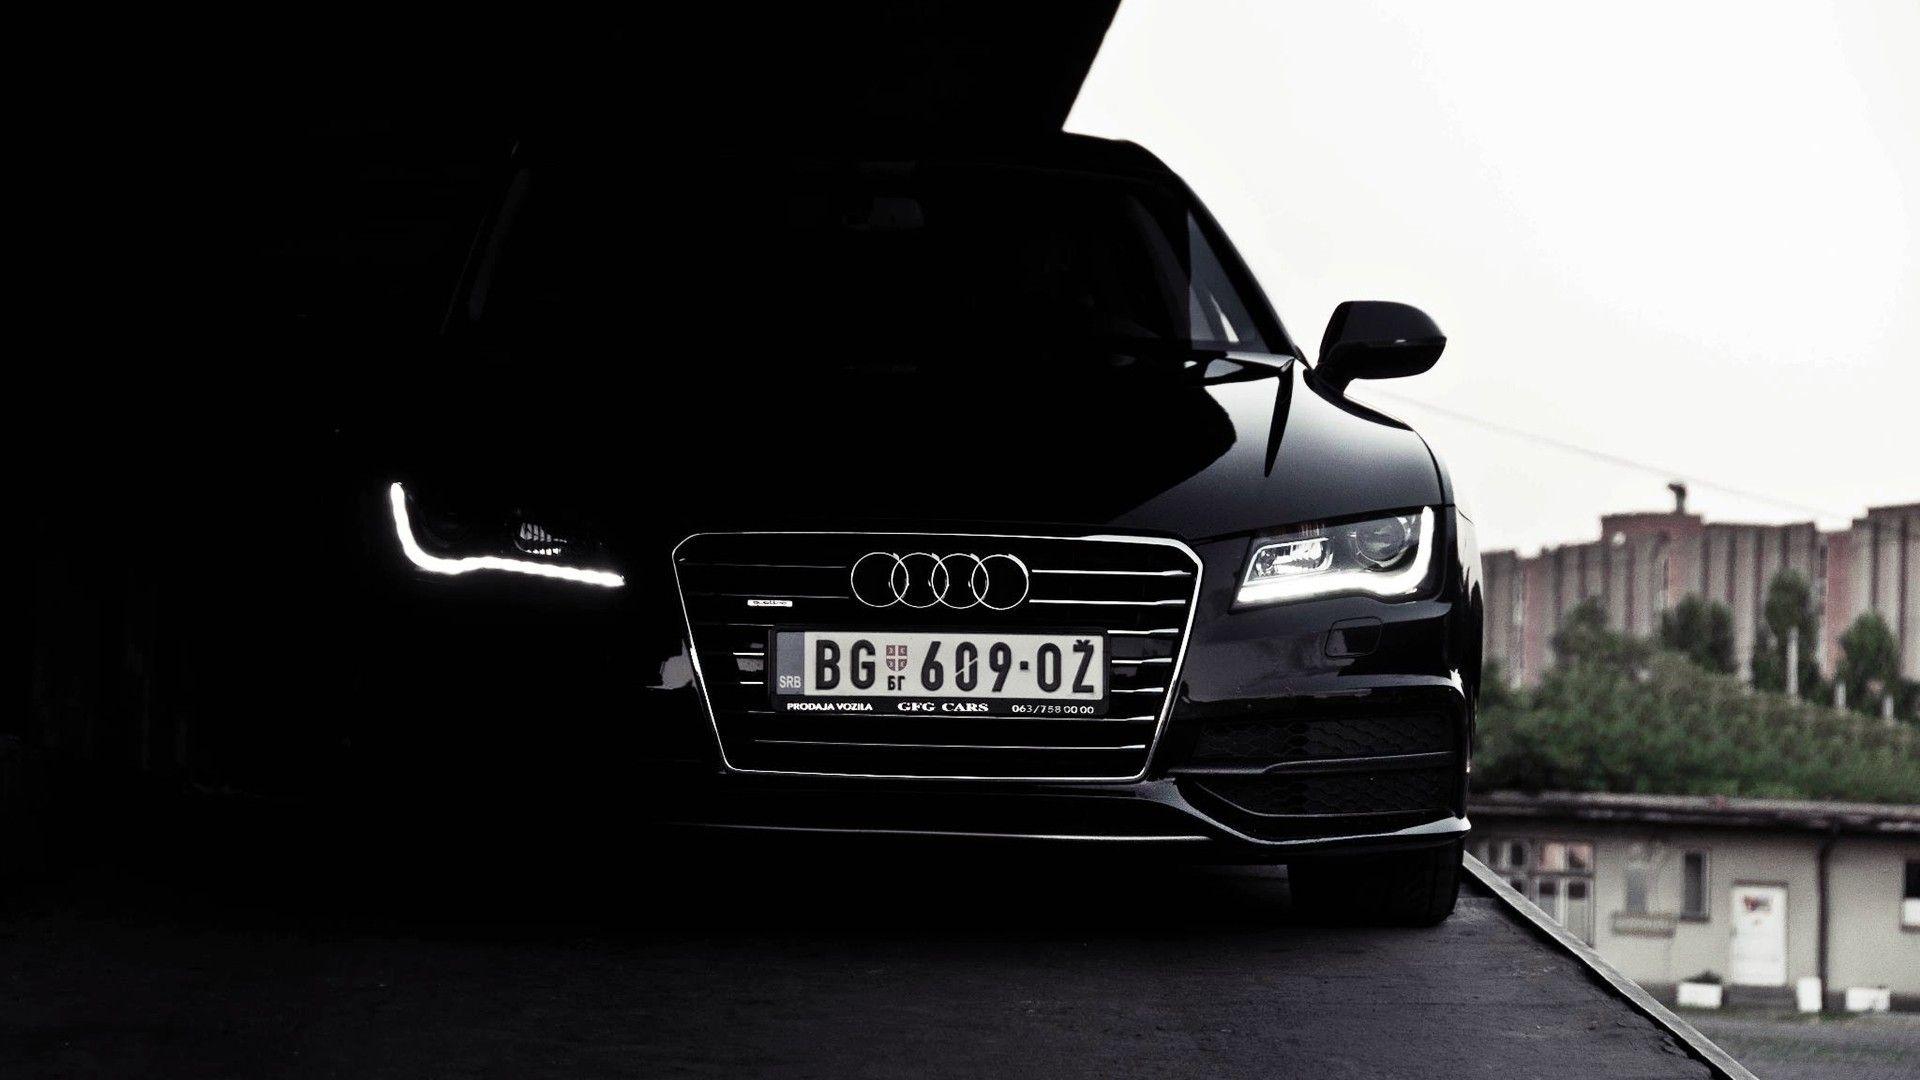 Audi A7 Front Nice. Audi Wallpaper. Nice, Audi a7